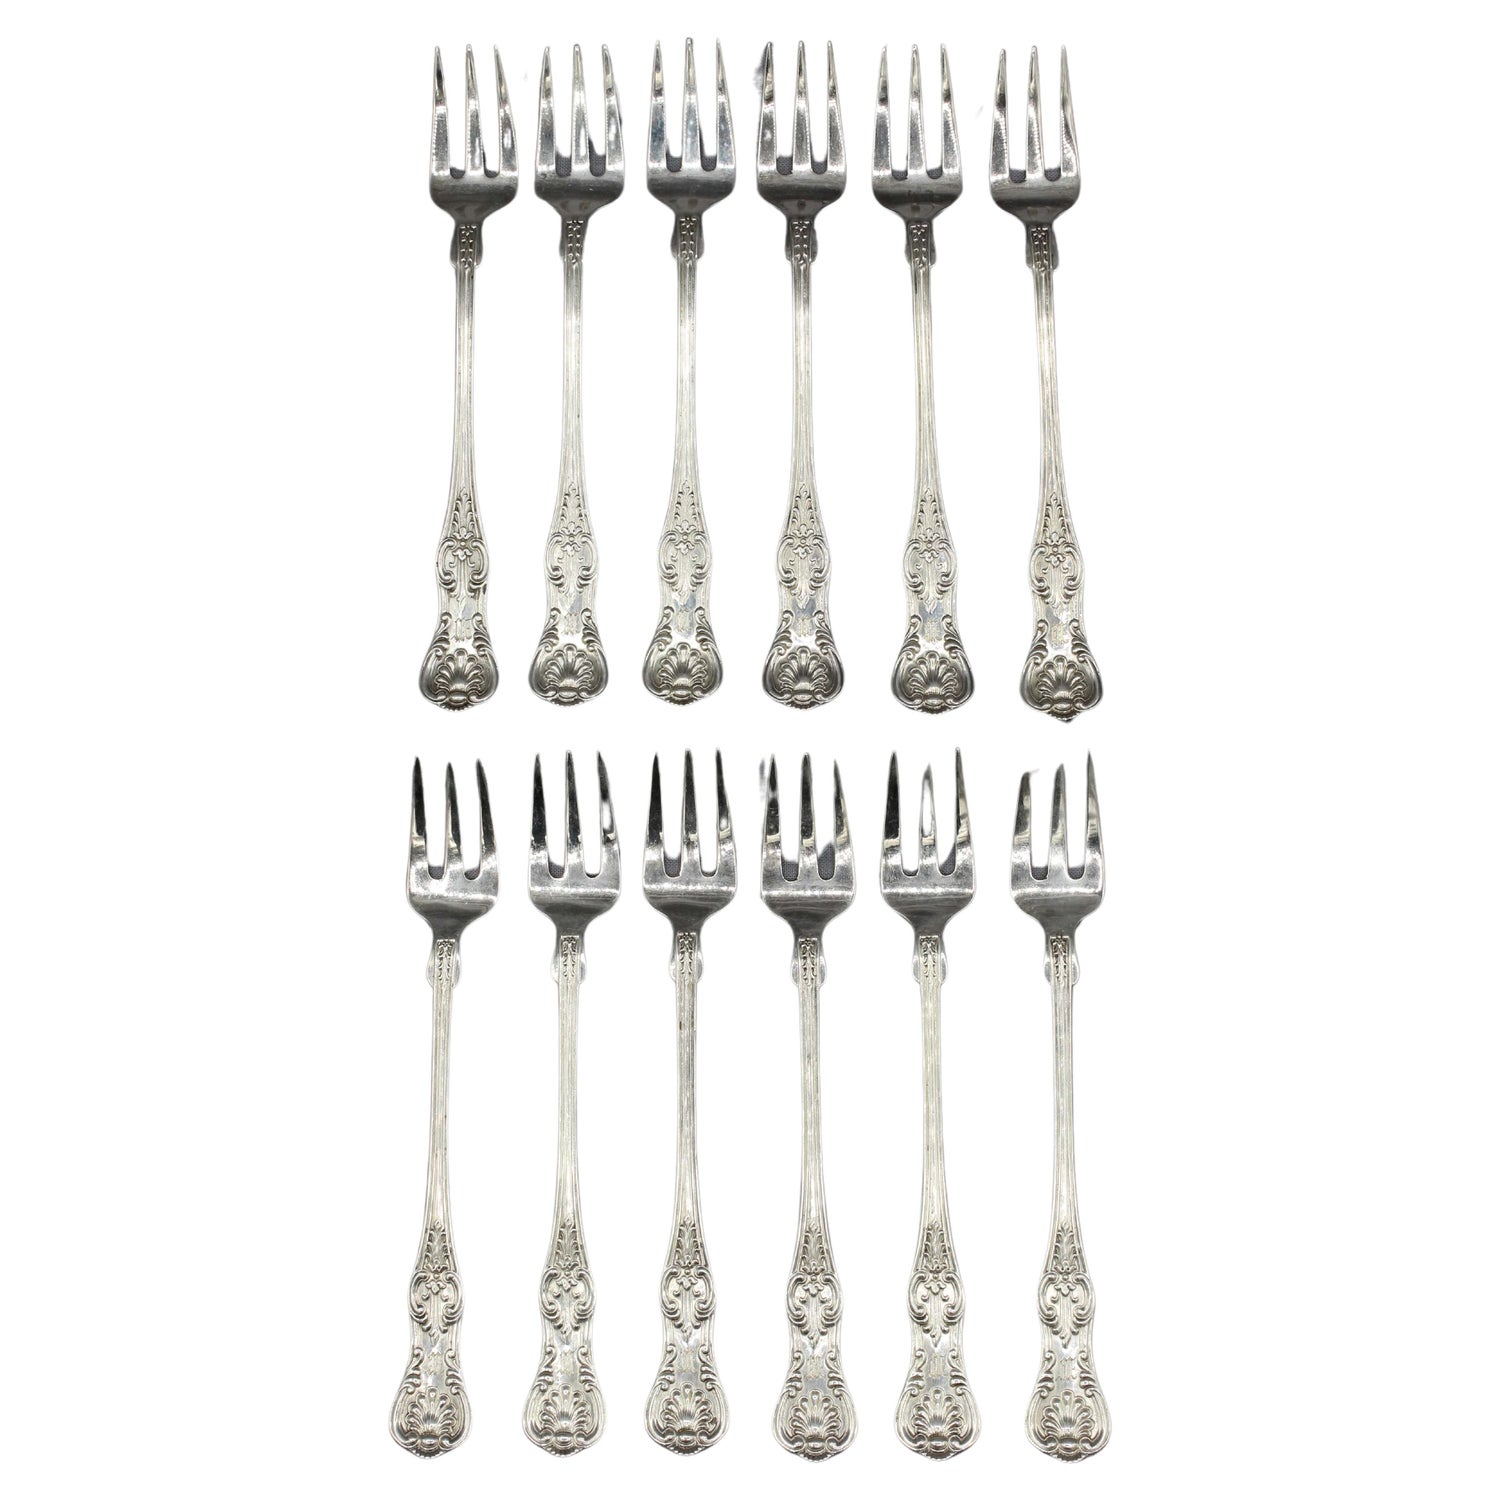 https://a.1stdibscdn.com/c-1900-set-of-12-sterling-silver-forks-by-dominick-haff-for-sale/f_64582/f_367837911698247966846/f_36783791_1698247968574_bg_processed.jpg?width=1500